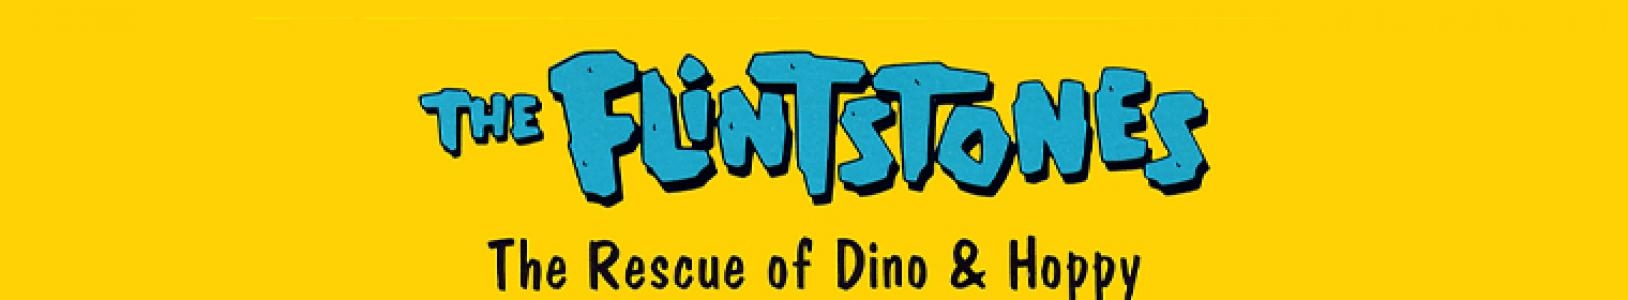 The Flintstones: The Rescue of Dino & Hoppy banner